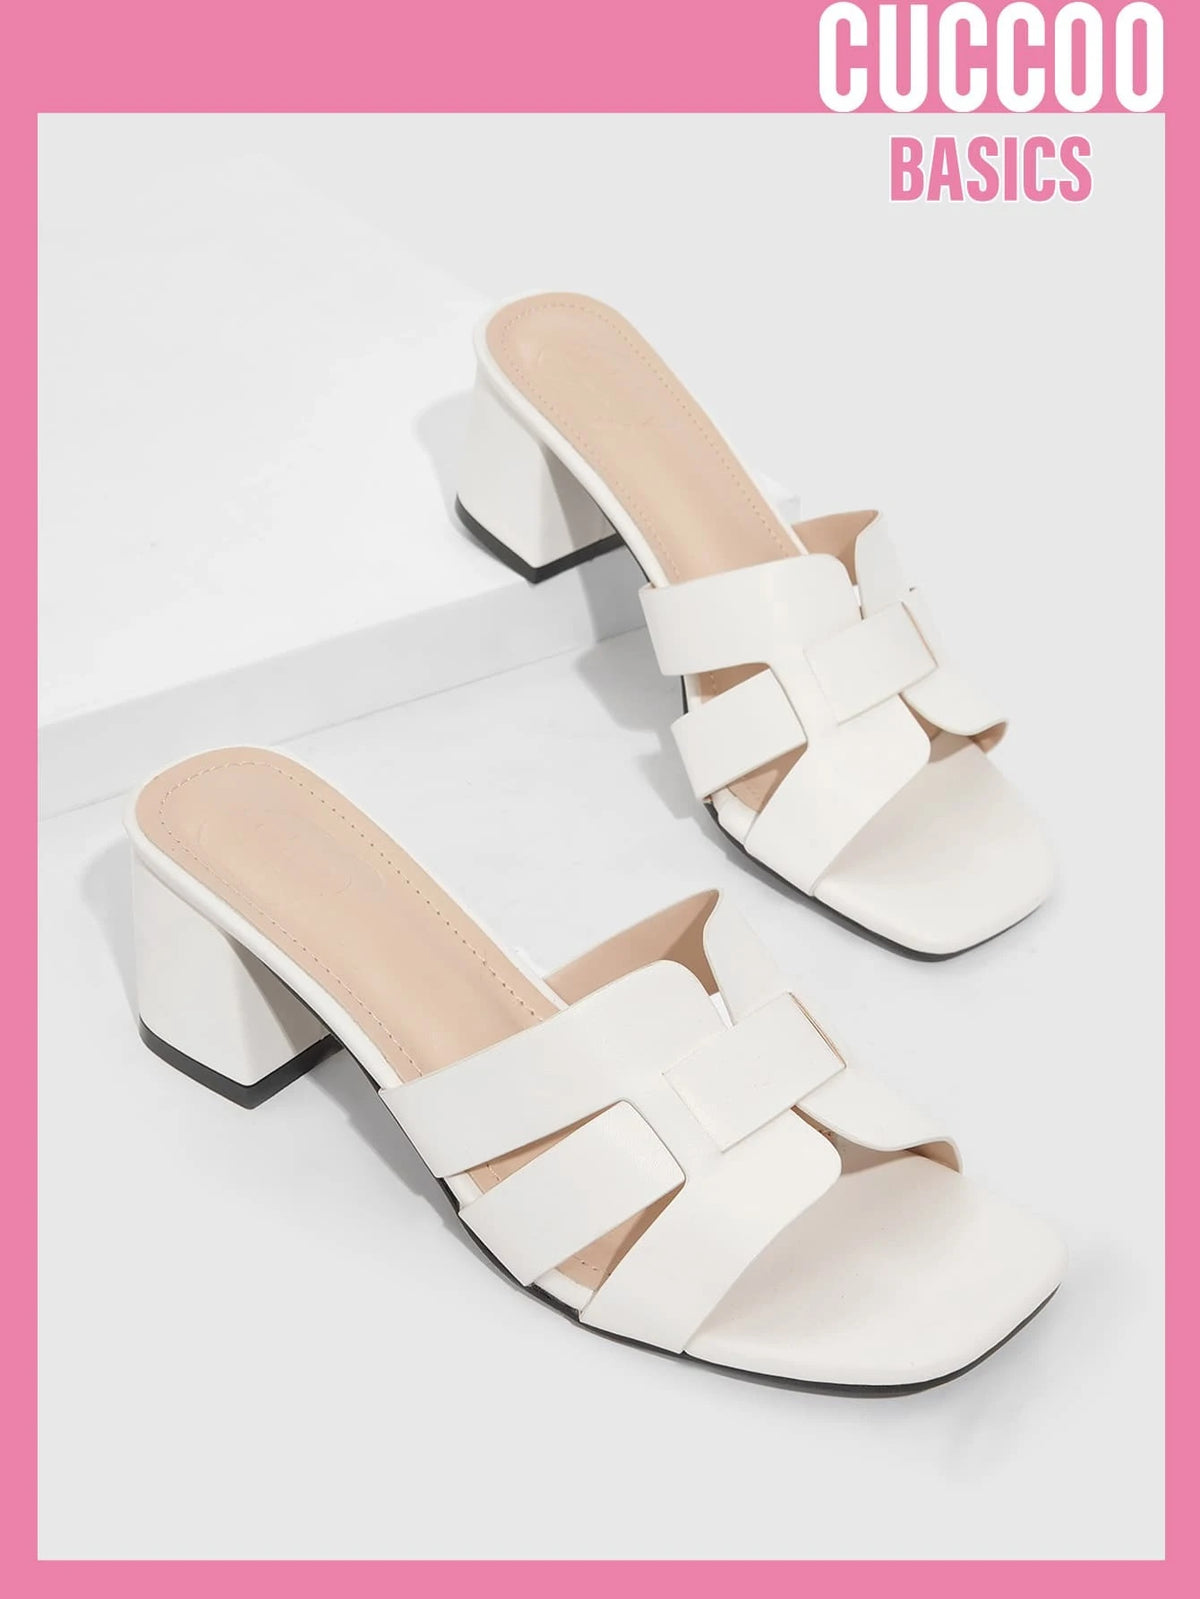 CUCCOO Basic Women Braided Detail Chunky Heeled Sandals, Elegant White Mule Sandals